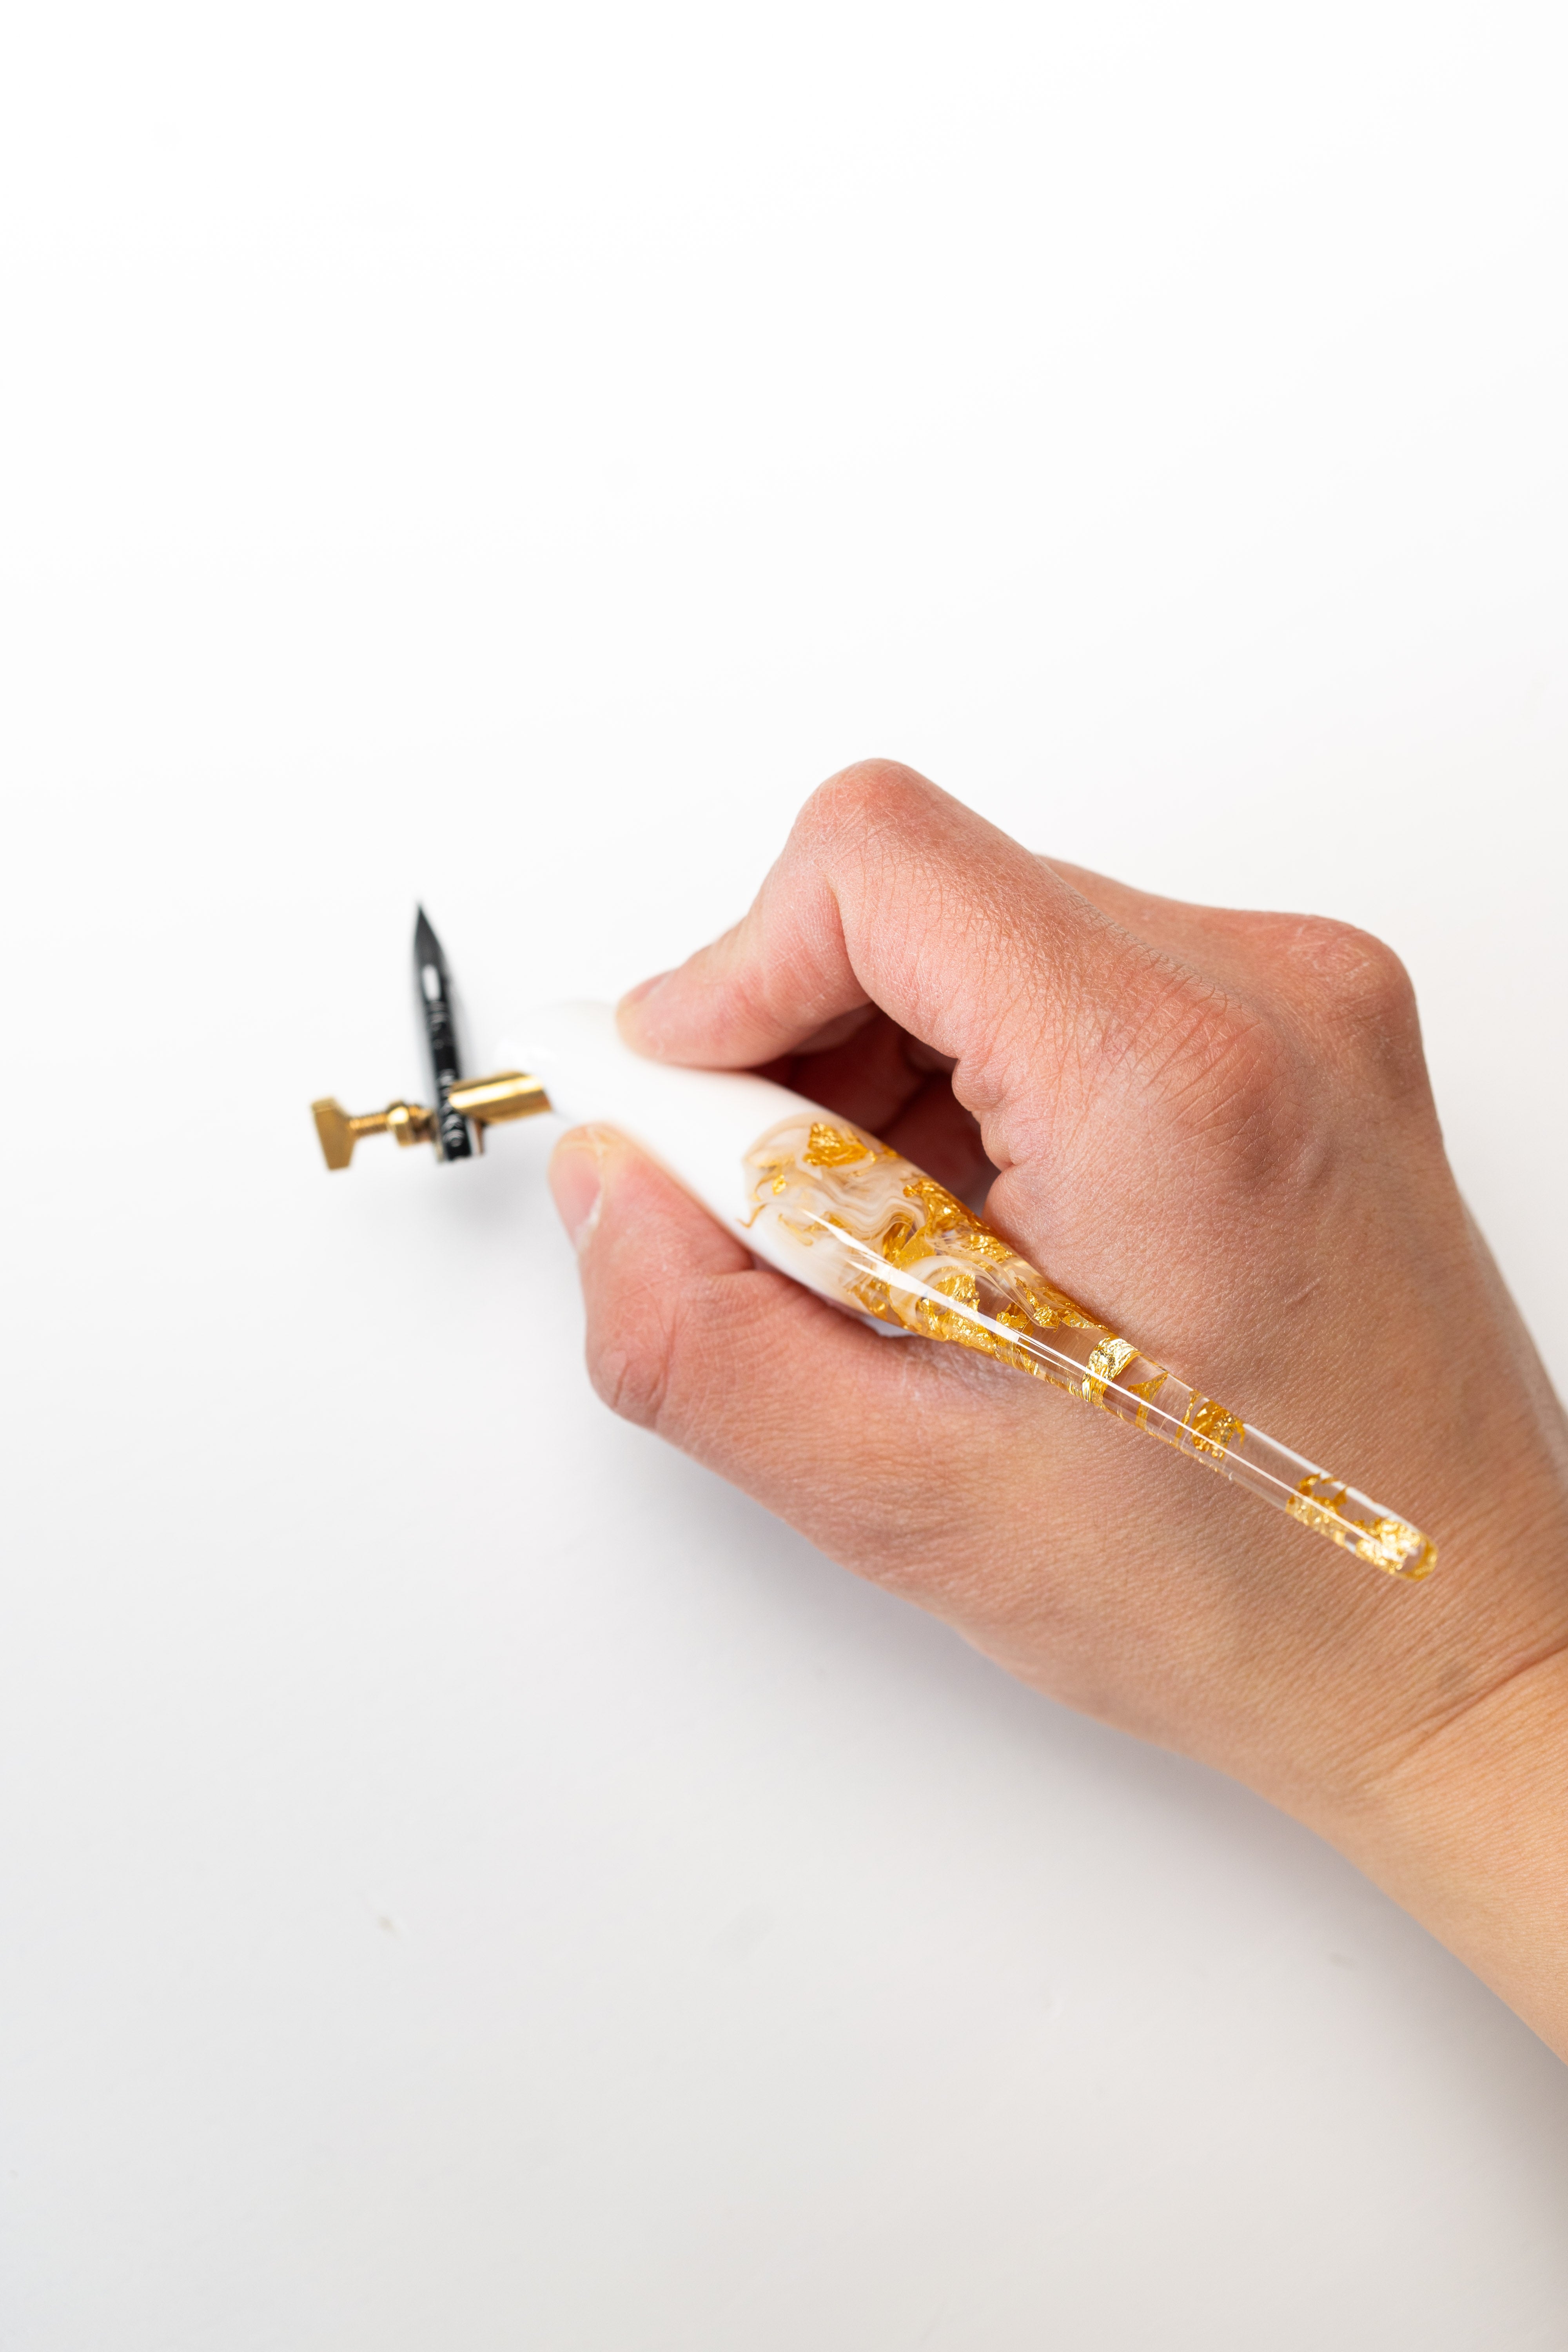 Oblique calligraphy handmade pen holder with universal flange